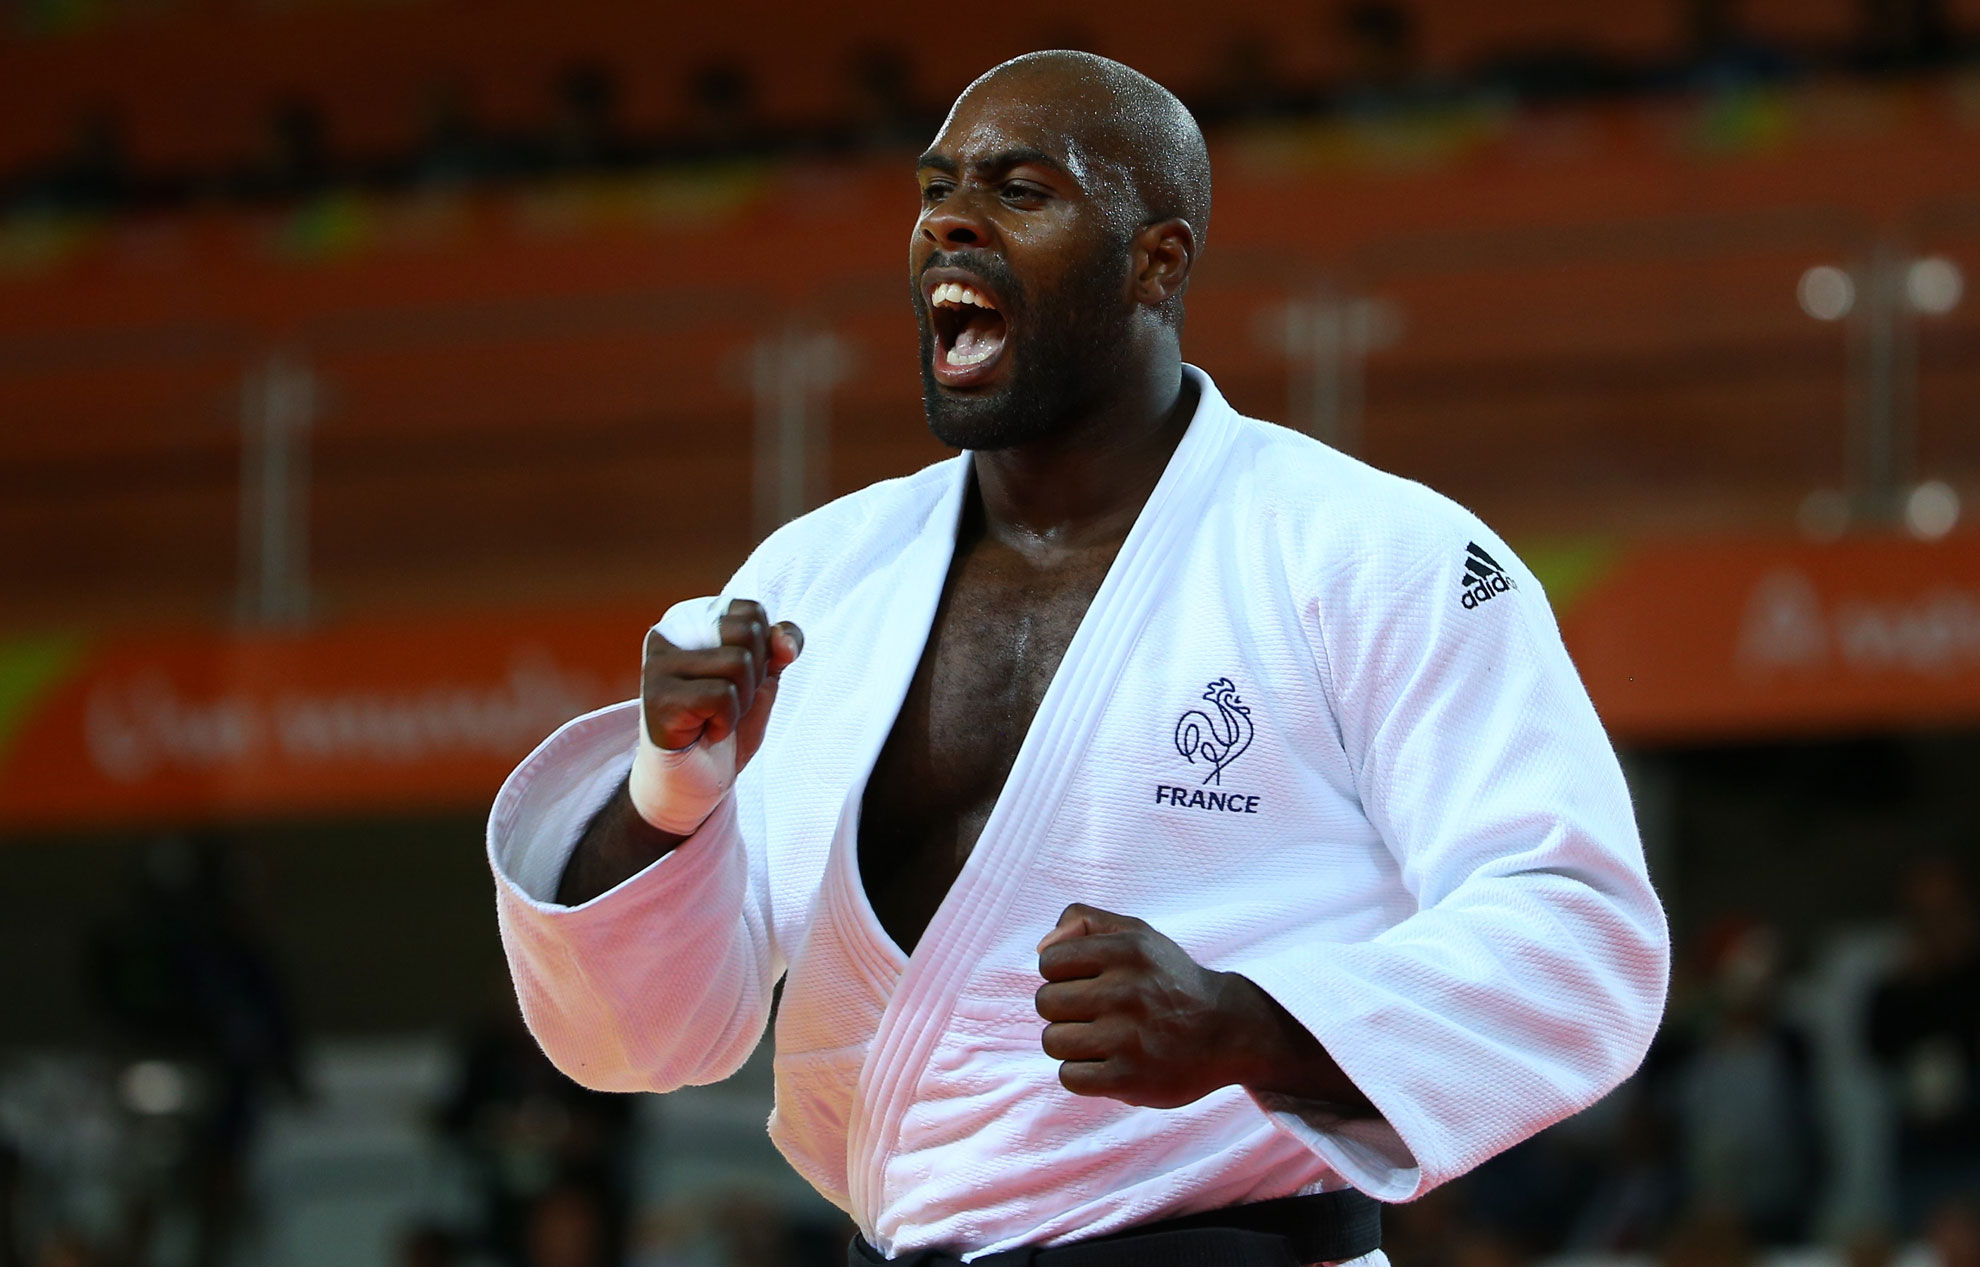 Teddy Riner : Le judoka aux prises avec des attaques racistes